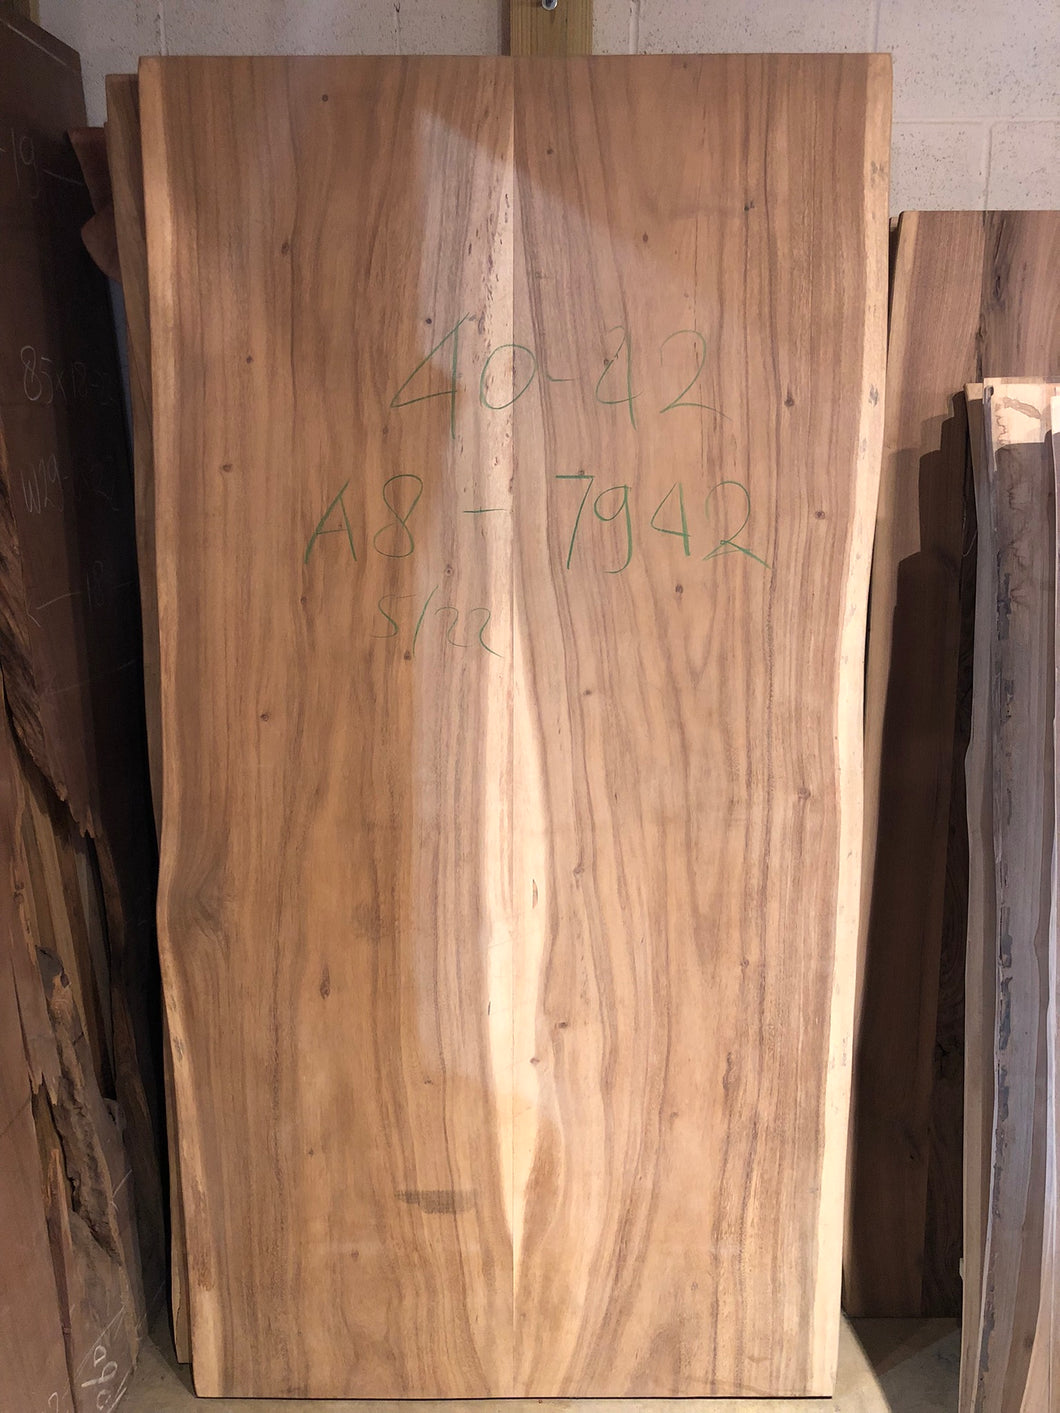 Live edge acacia wood slab 40-42